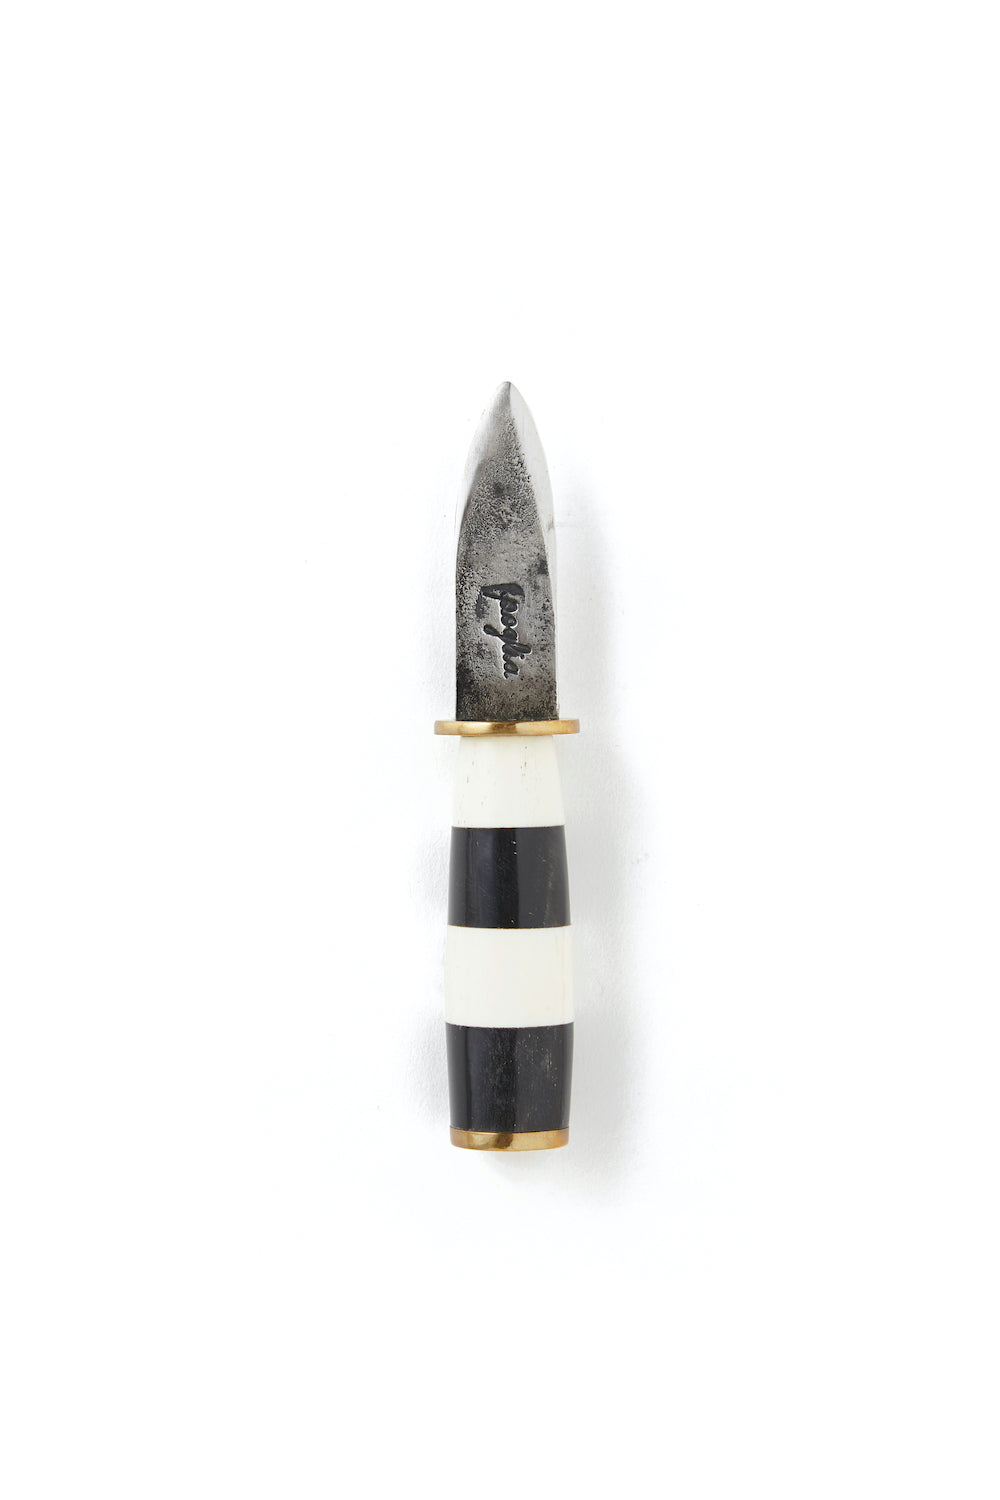 POGLIA - OYSTER KNIFE (HORN/BONE/BRASS)